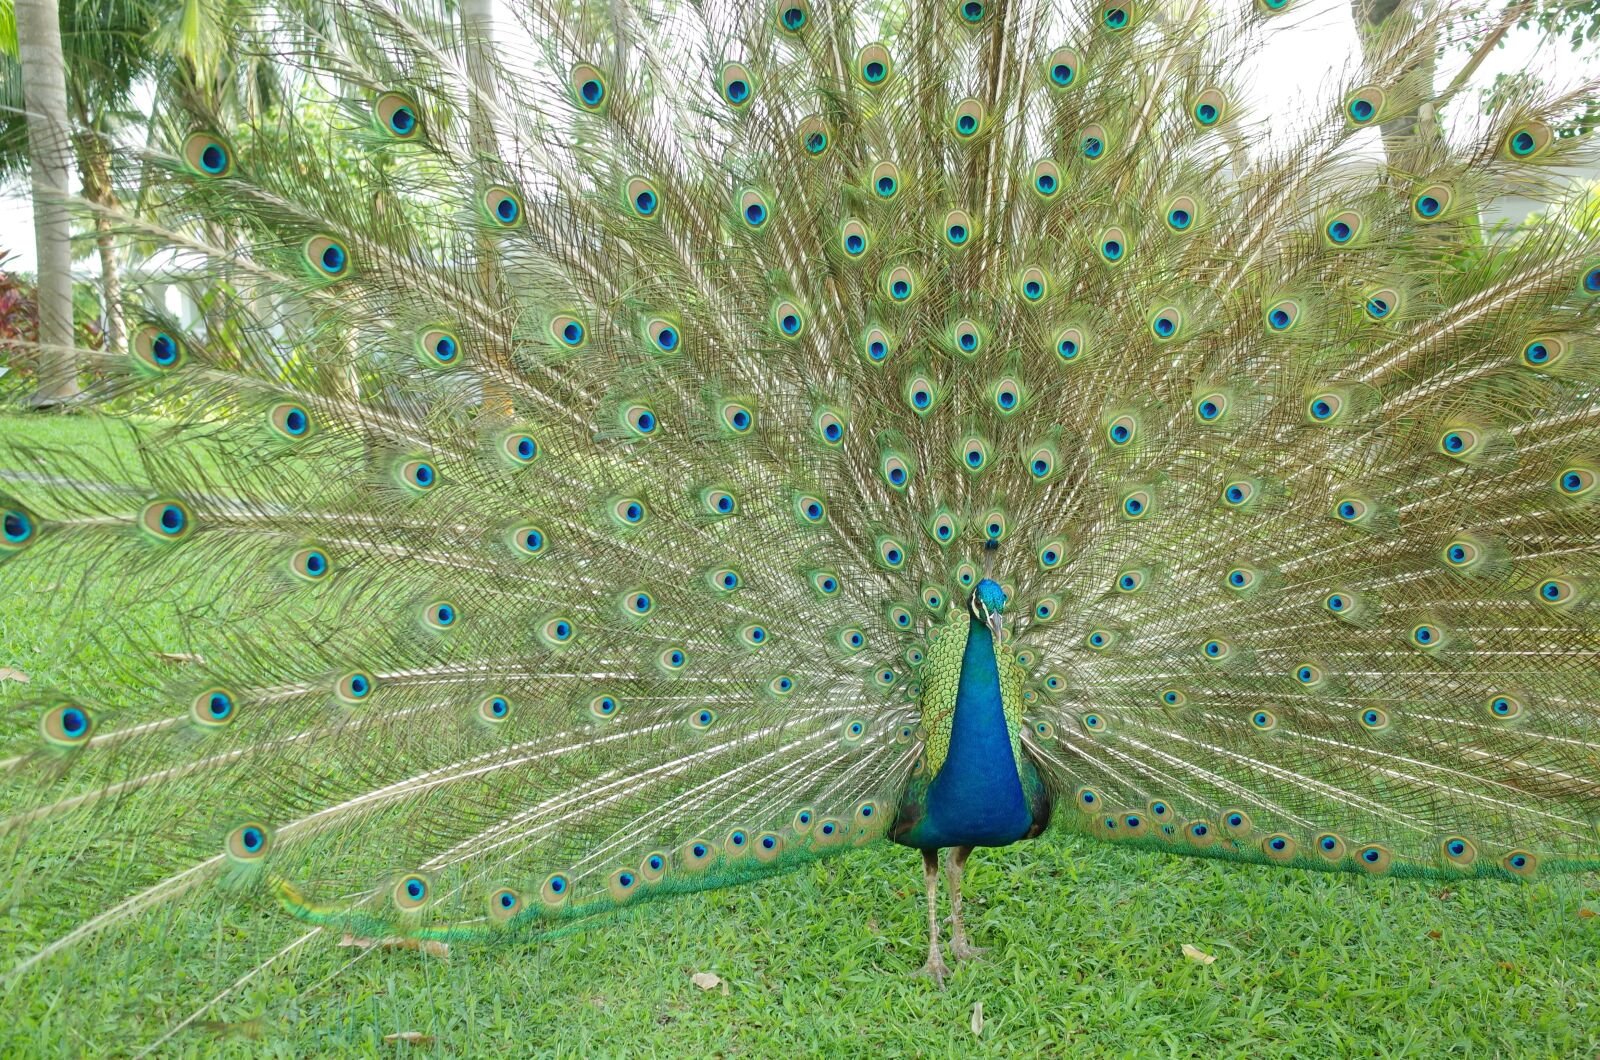 GR Lens sample photo. Peacock, feathers, bird photography